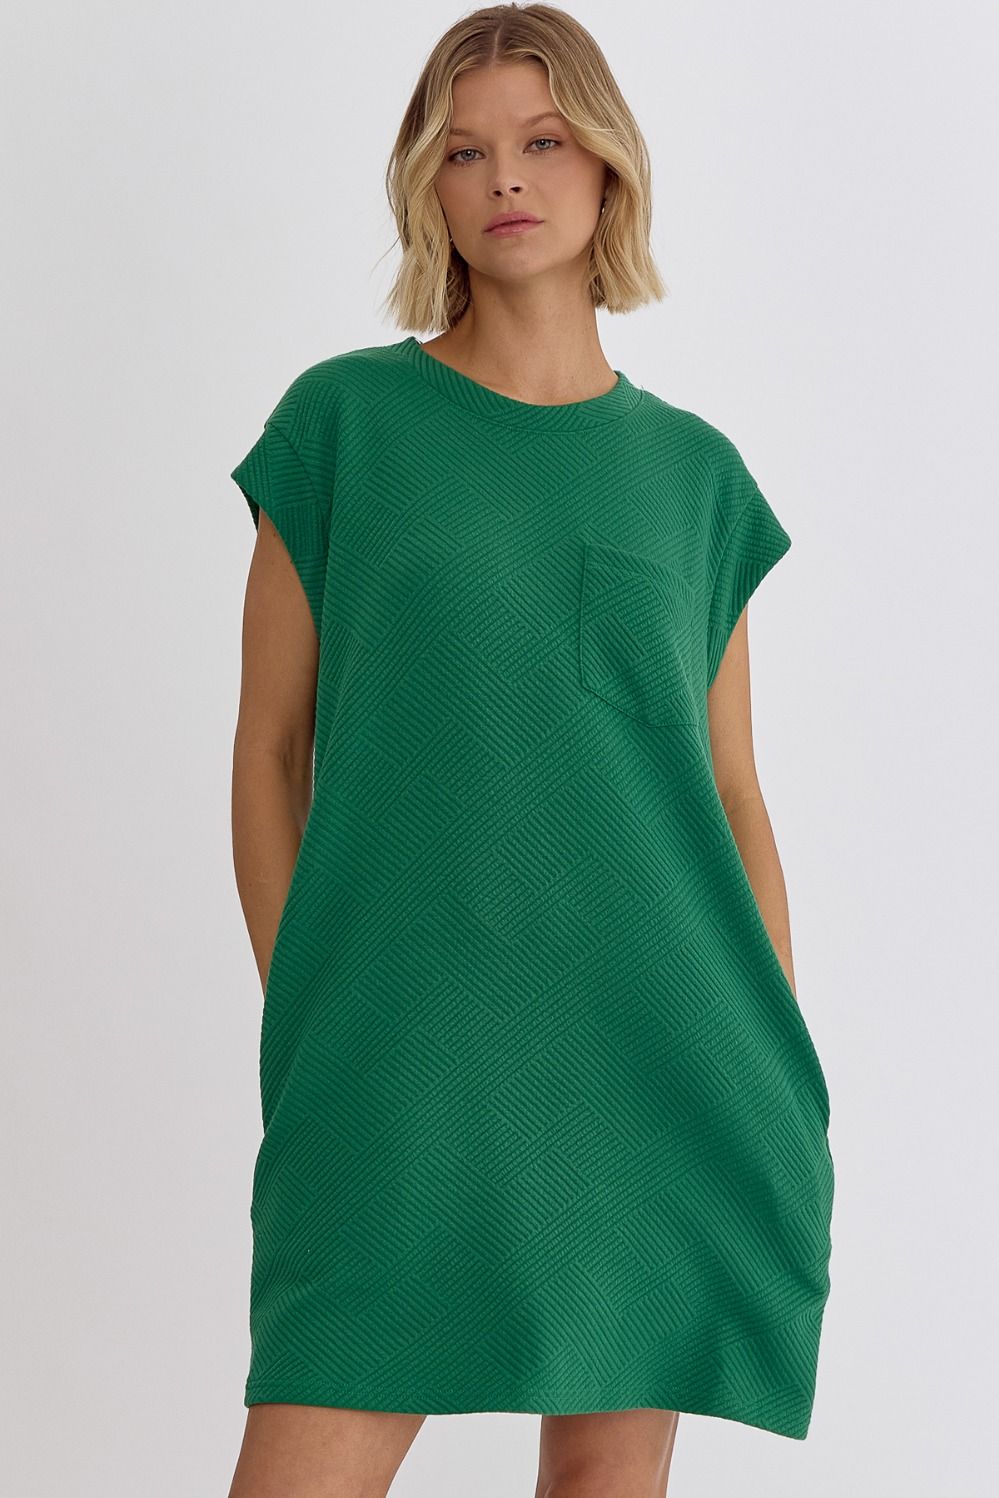 ENTRO INC Women's Dresses GREEN / S Textured Round Neck Sleeveless Mini Dress || David's Clothing D22390